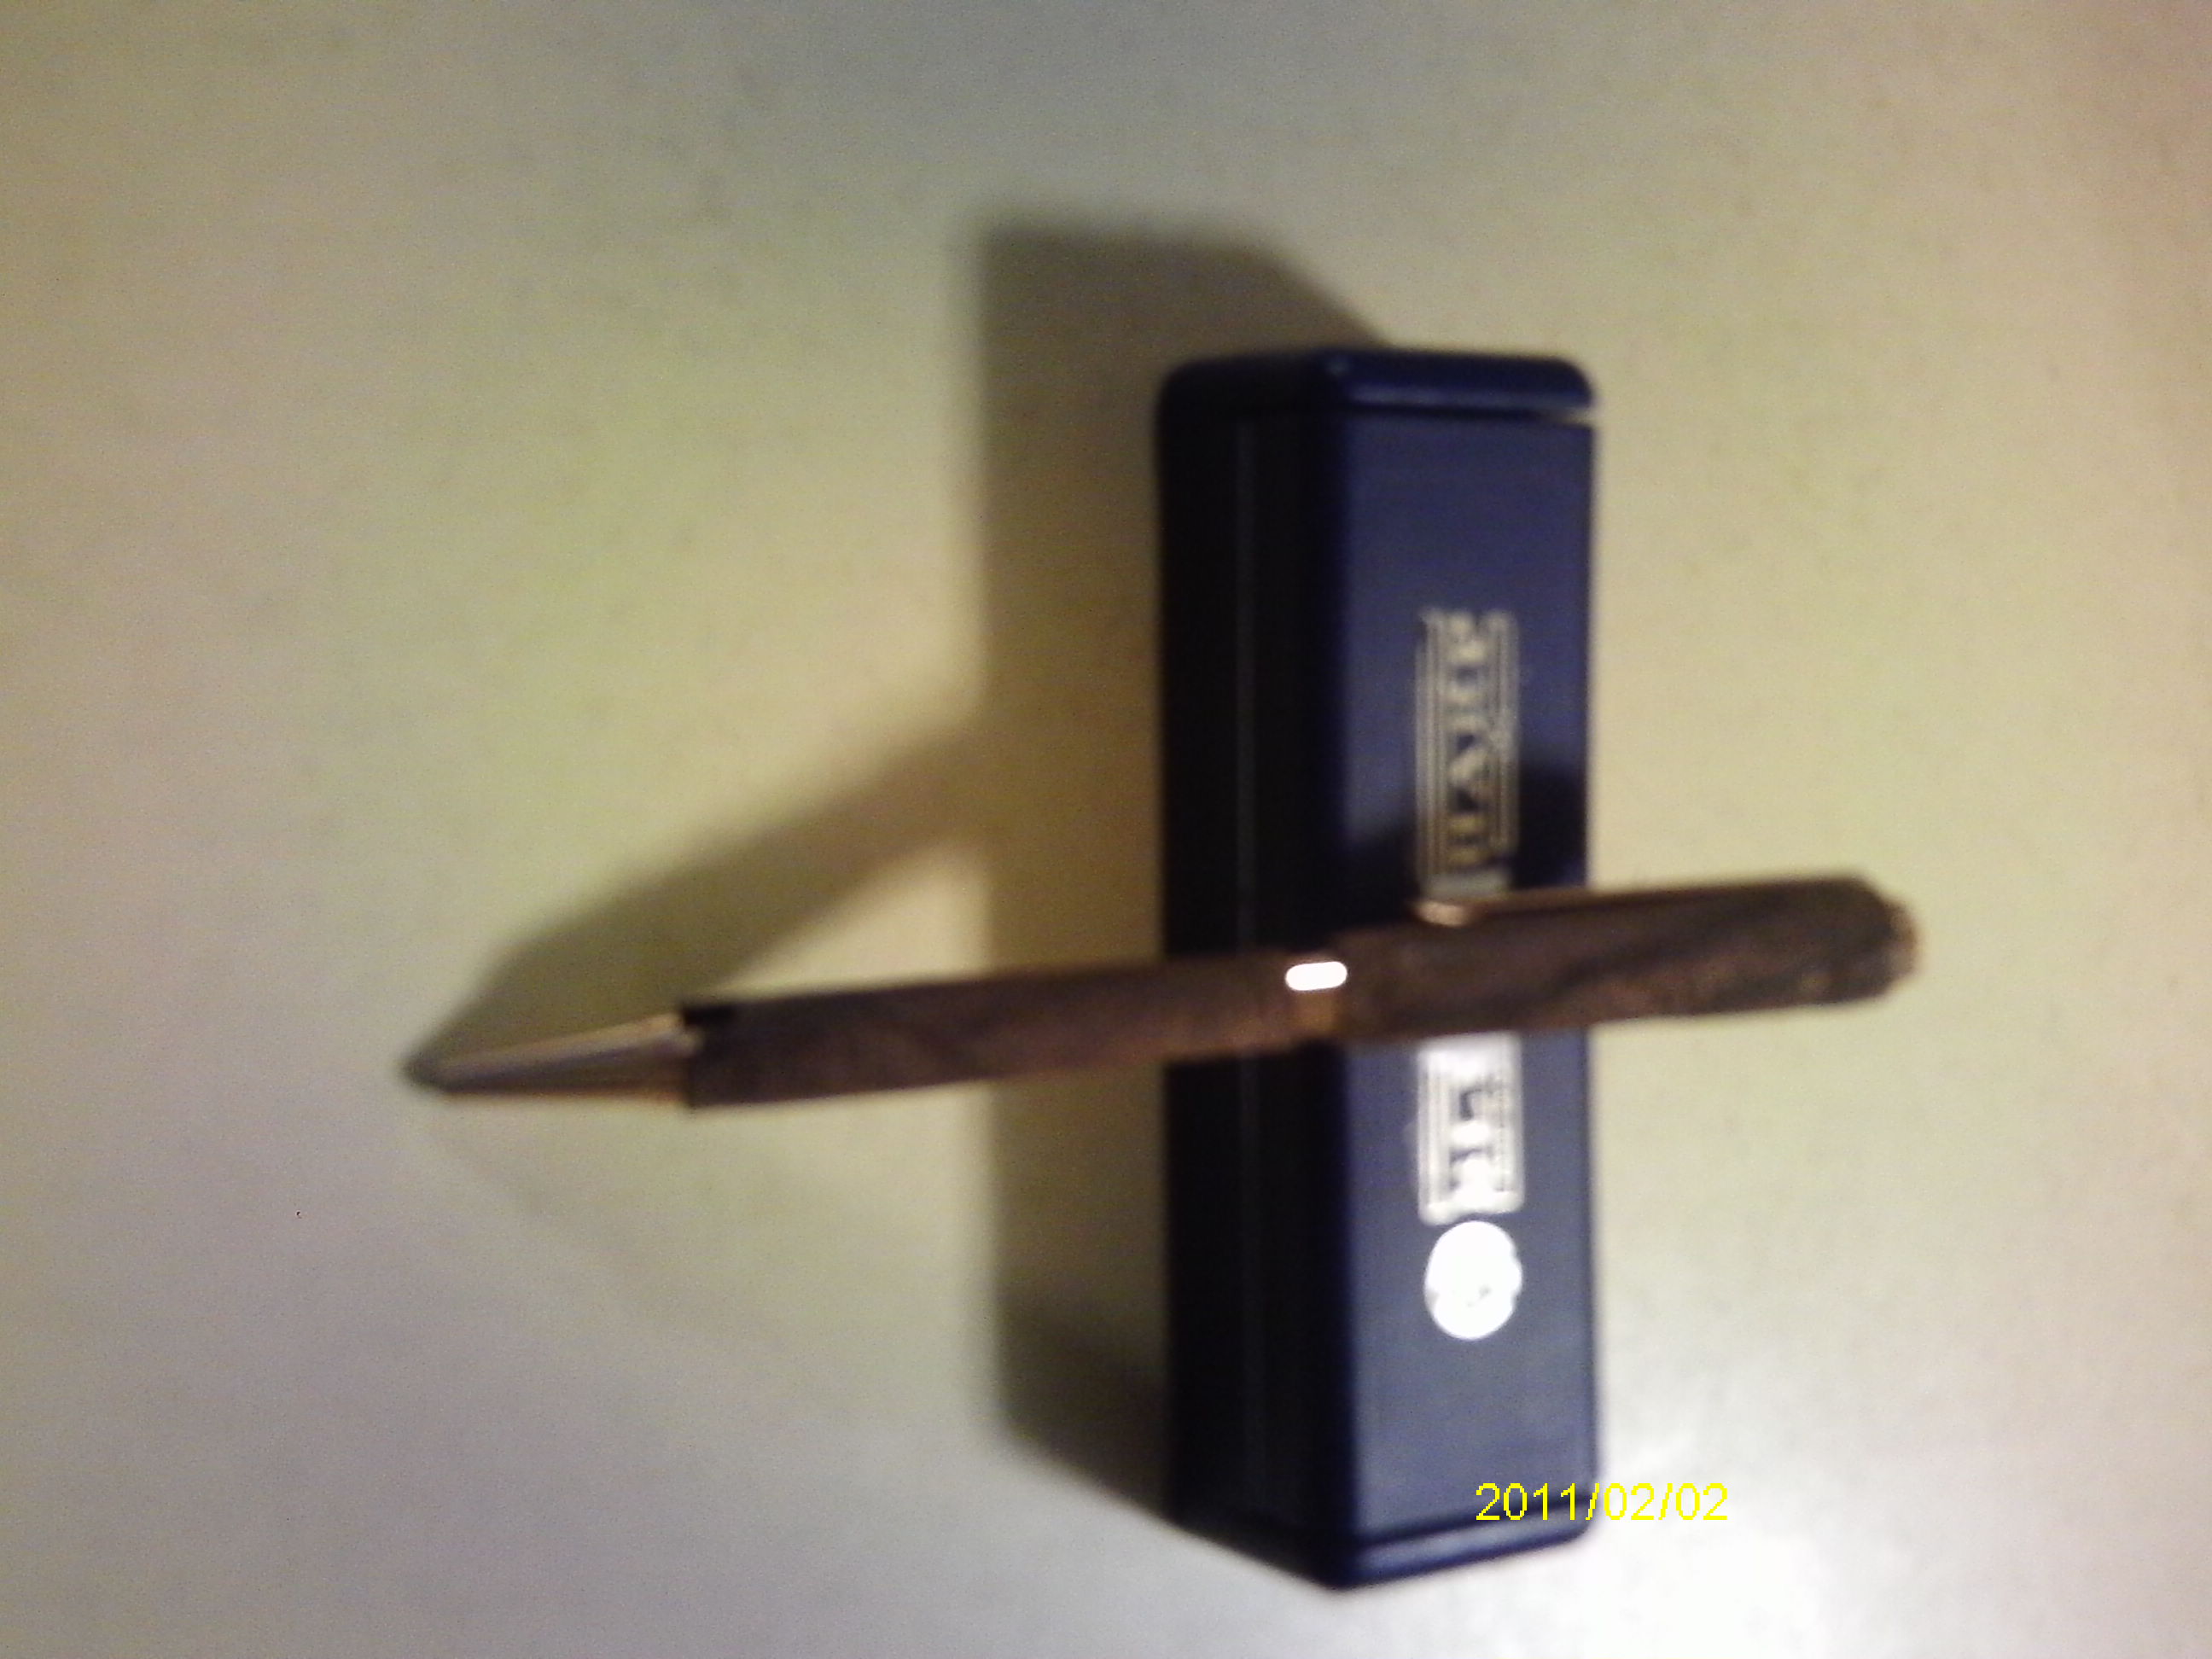 pith pen from penhead to penmaker1967